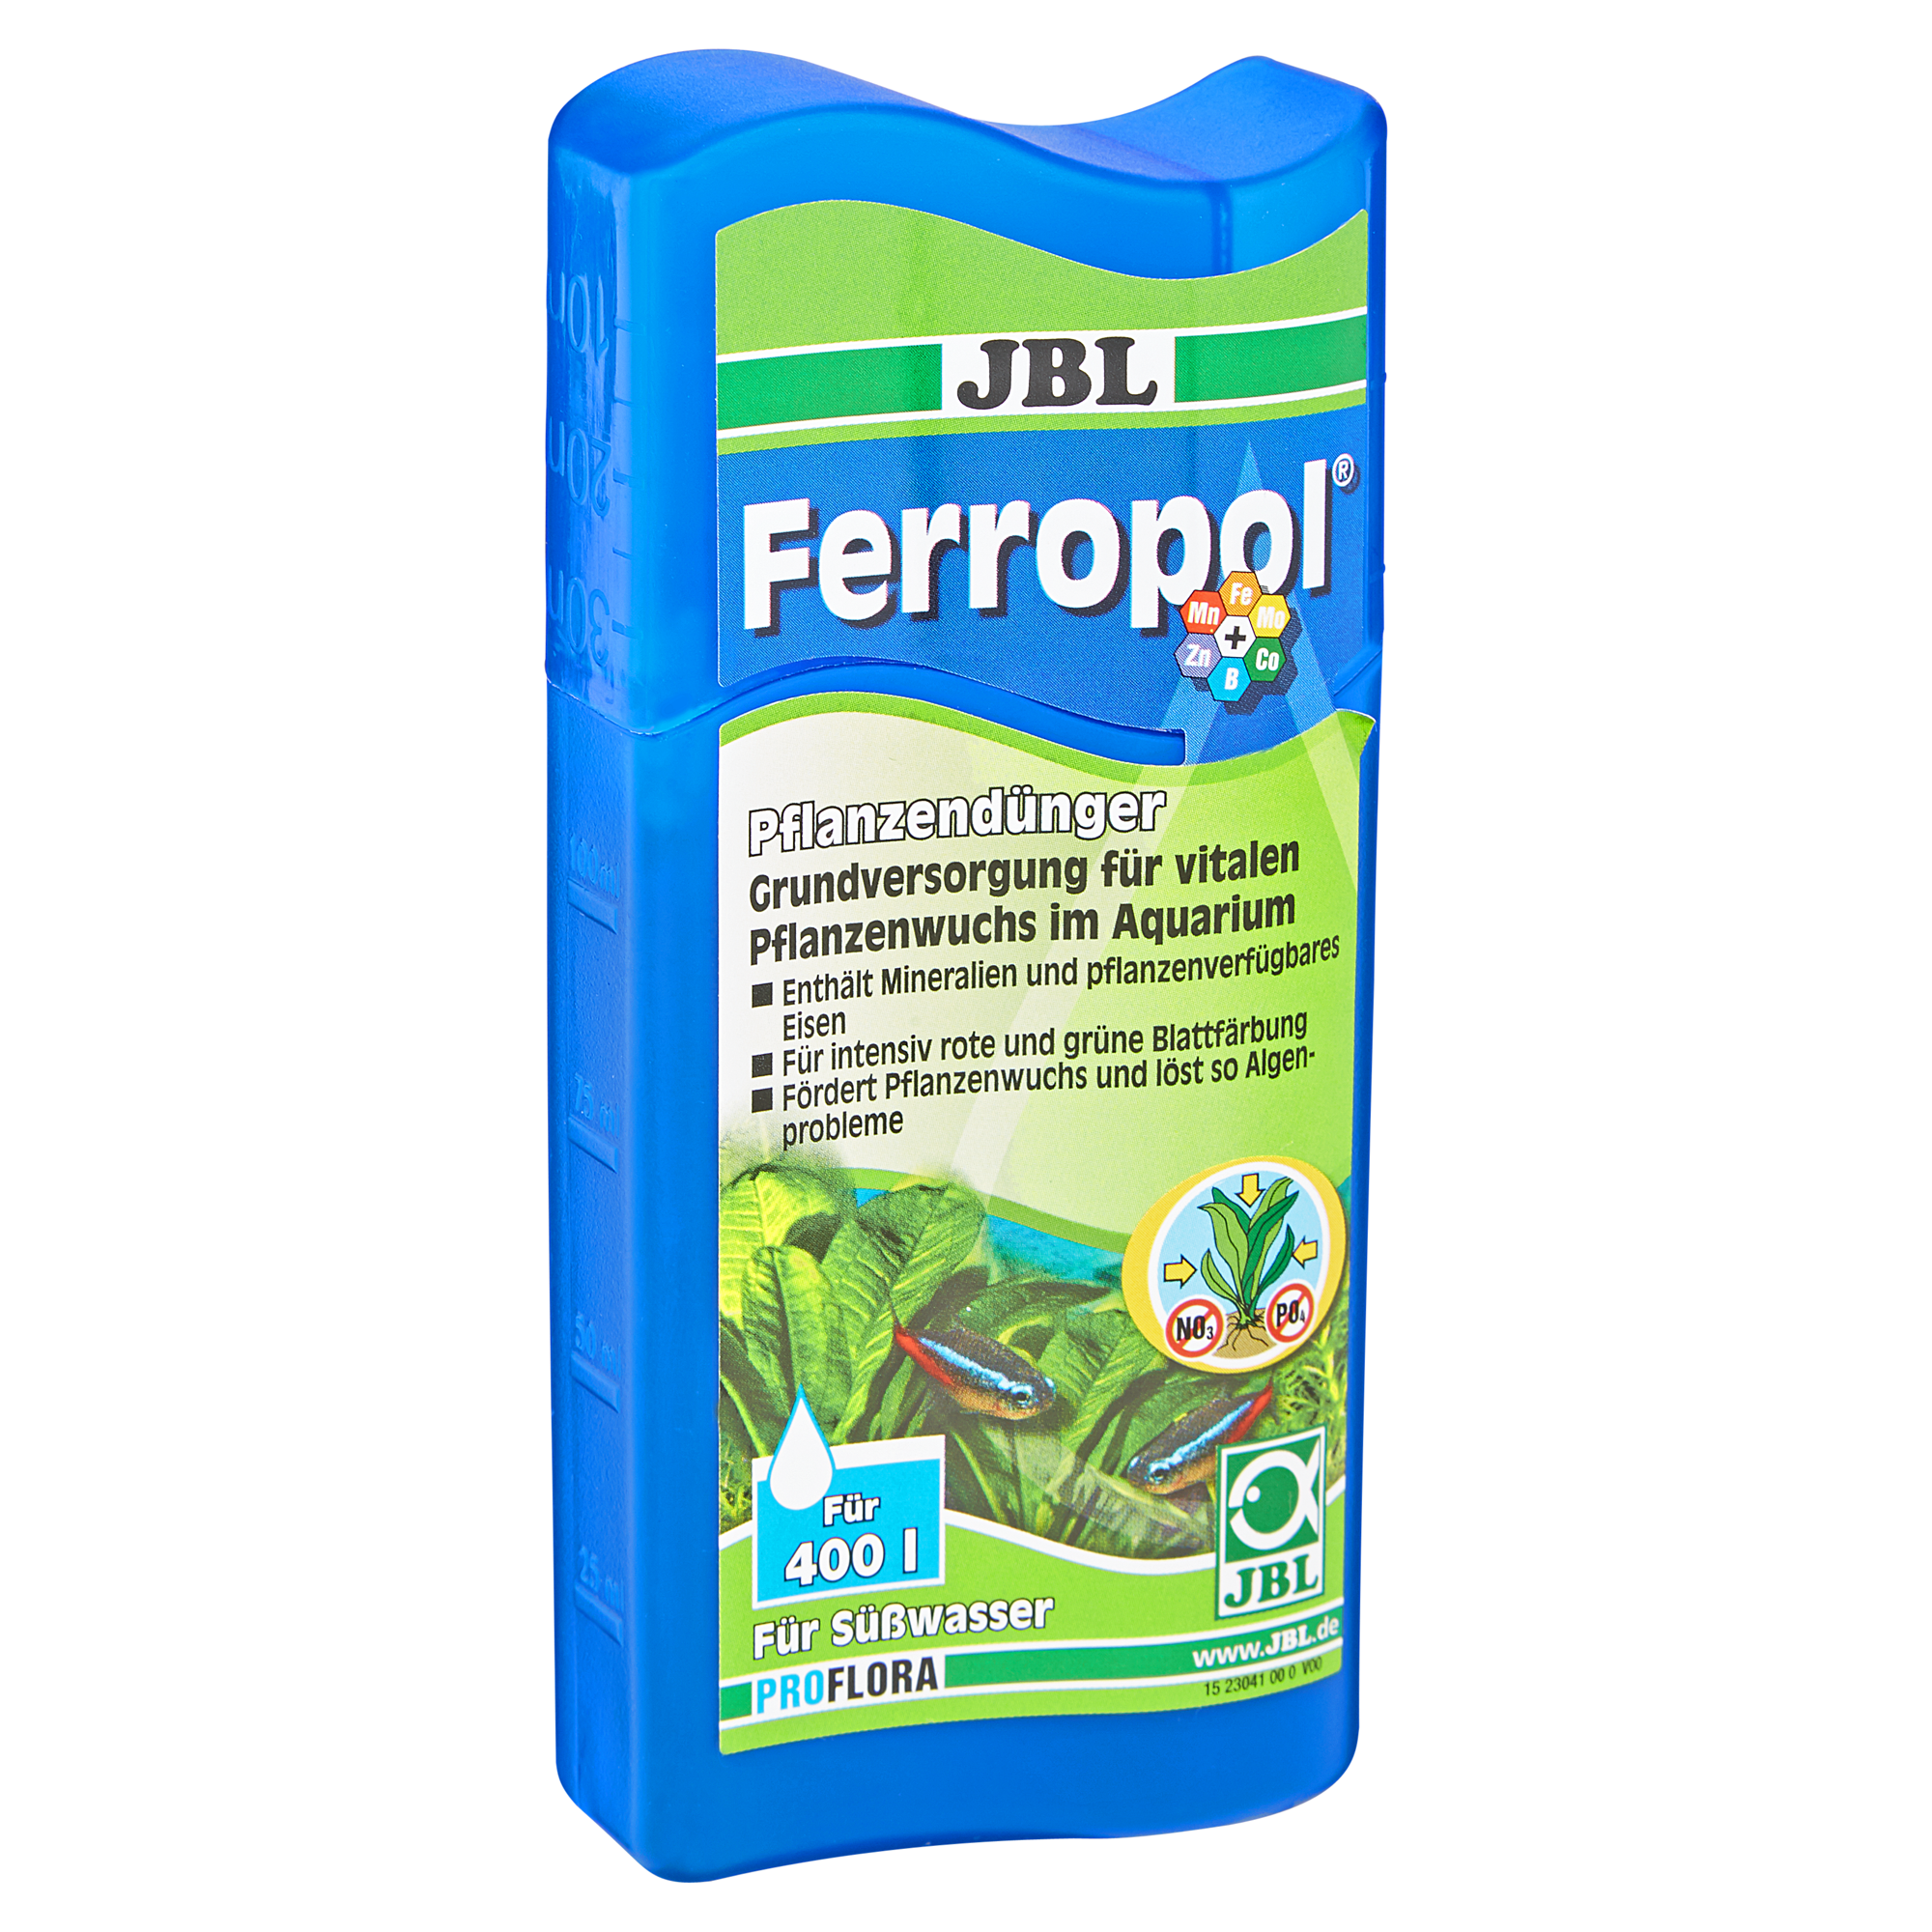 Pflanzendünger "Ferropol" 100 ml + product picture